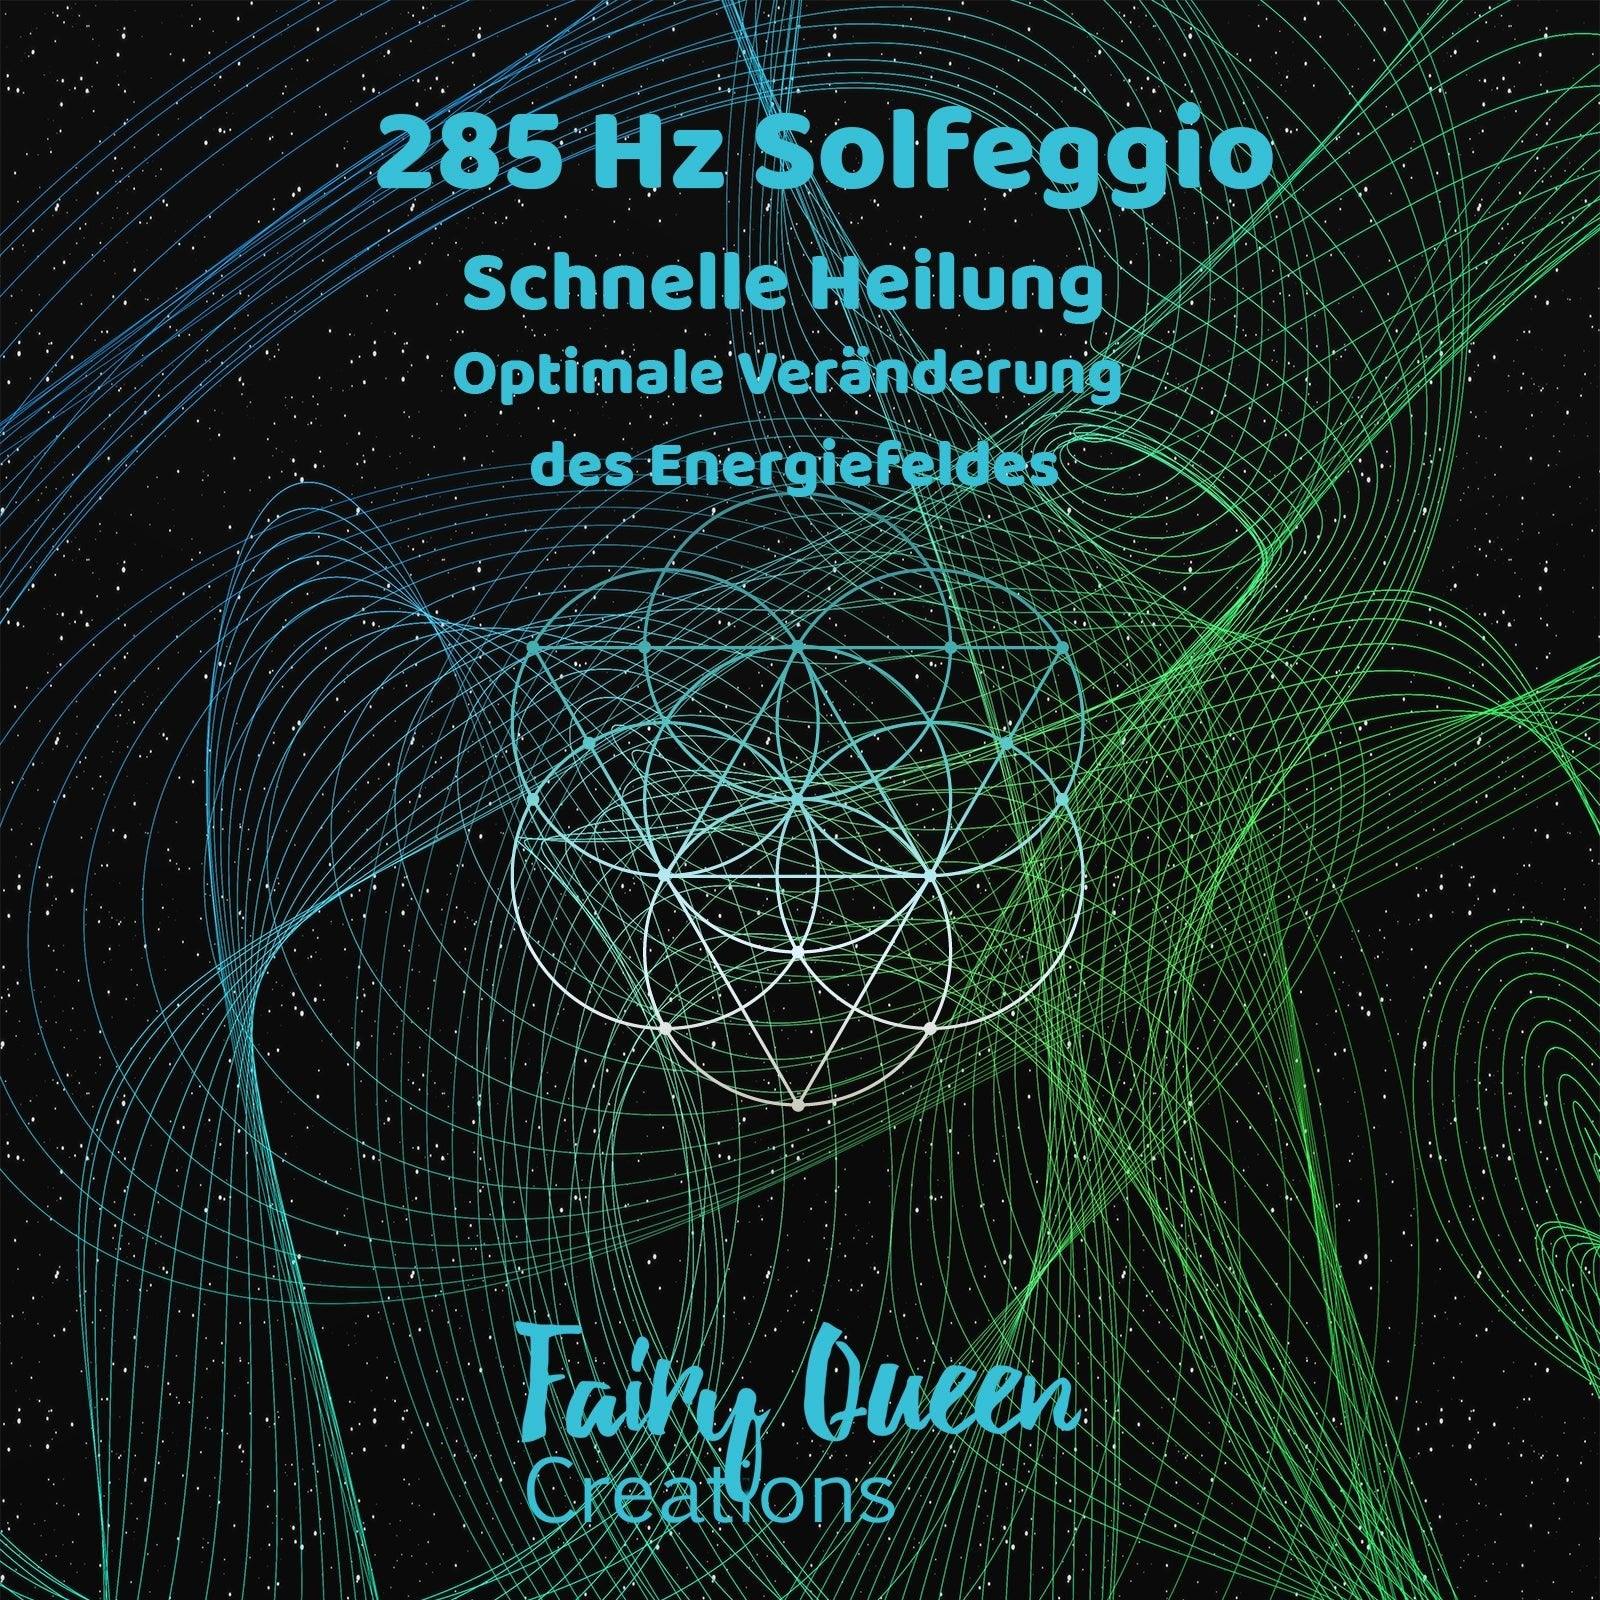 285 Hz Solfeggio - Rapid Healing - Soulshinecreators - 285 Hz